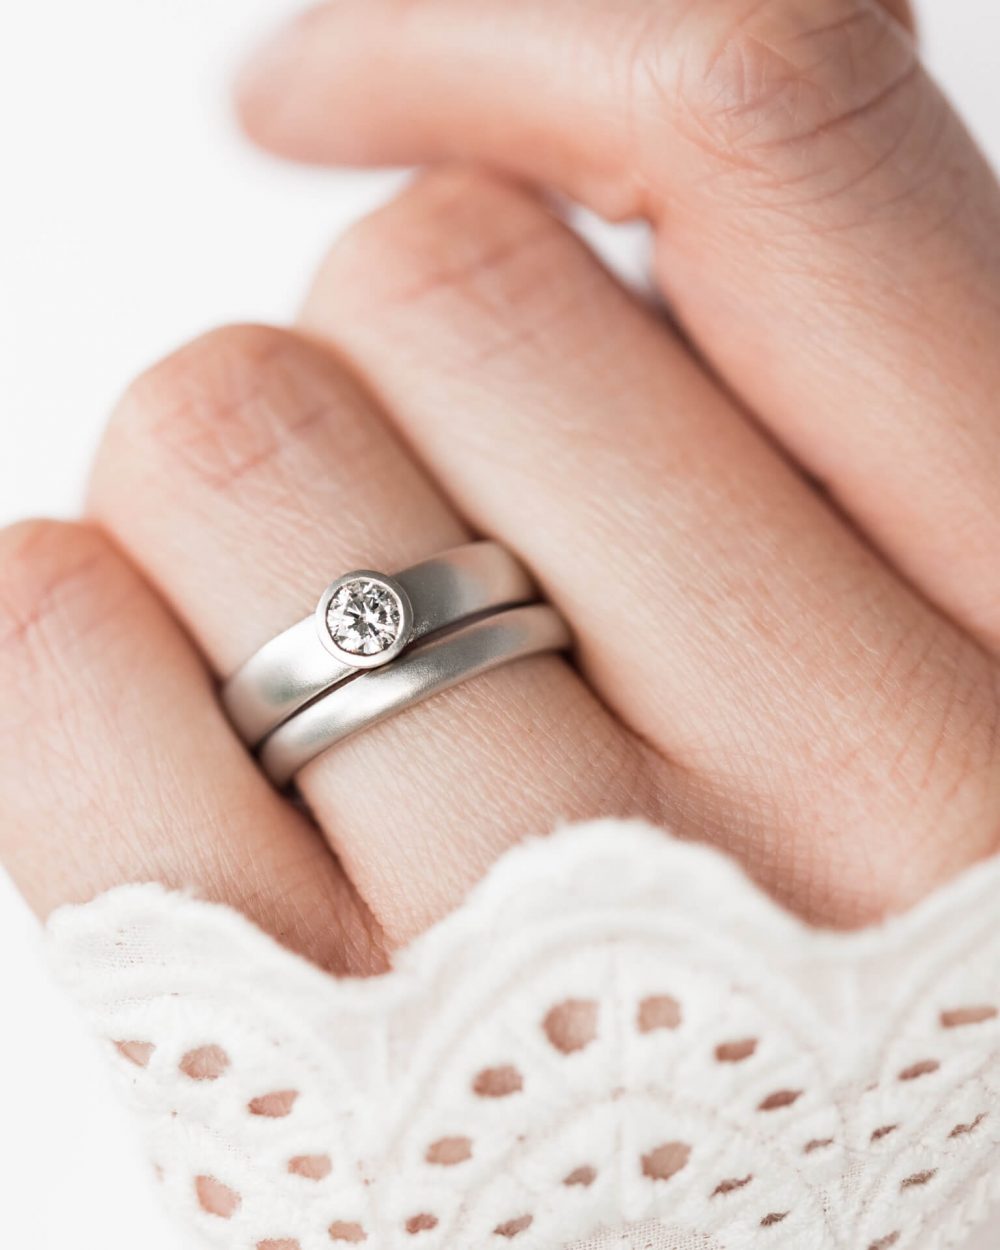 Grand Diamond Engagement Ring With Wedding Band On Finger Jacks Turner Bristol